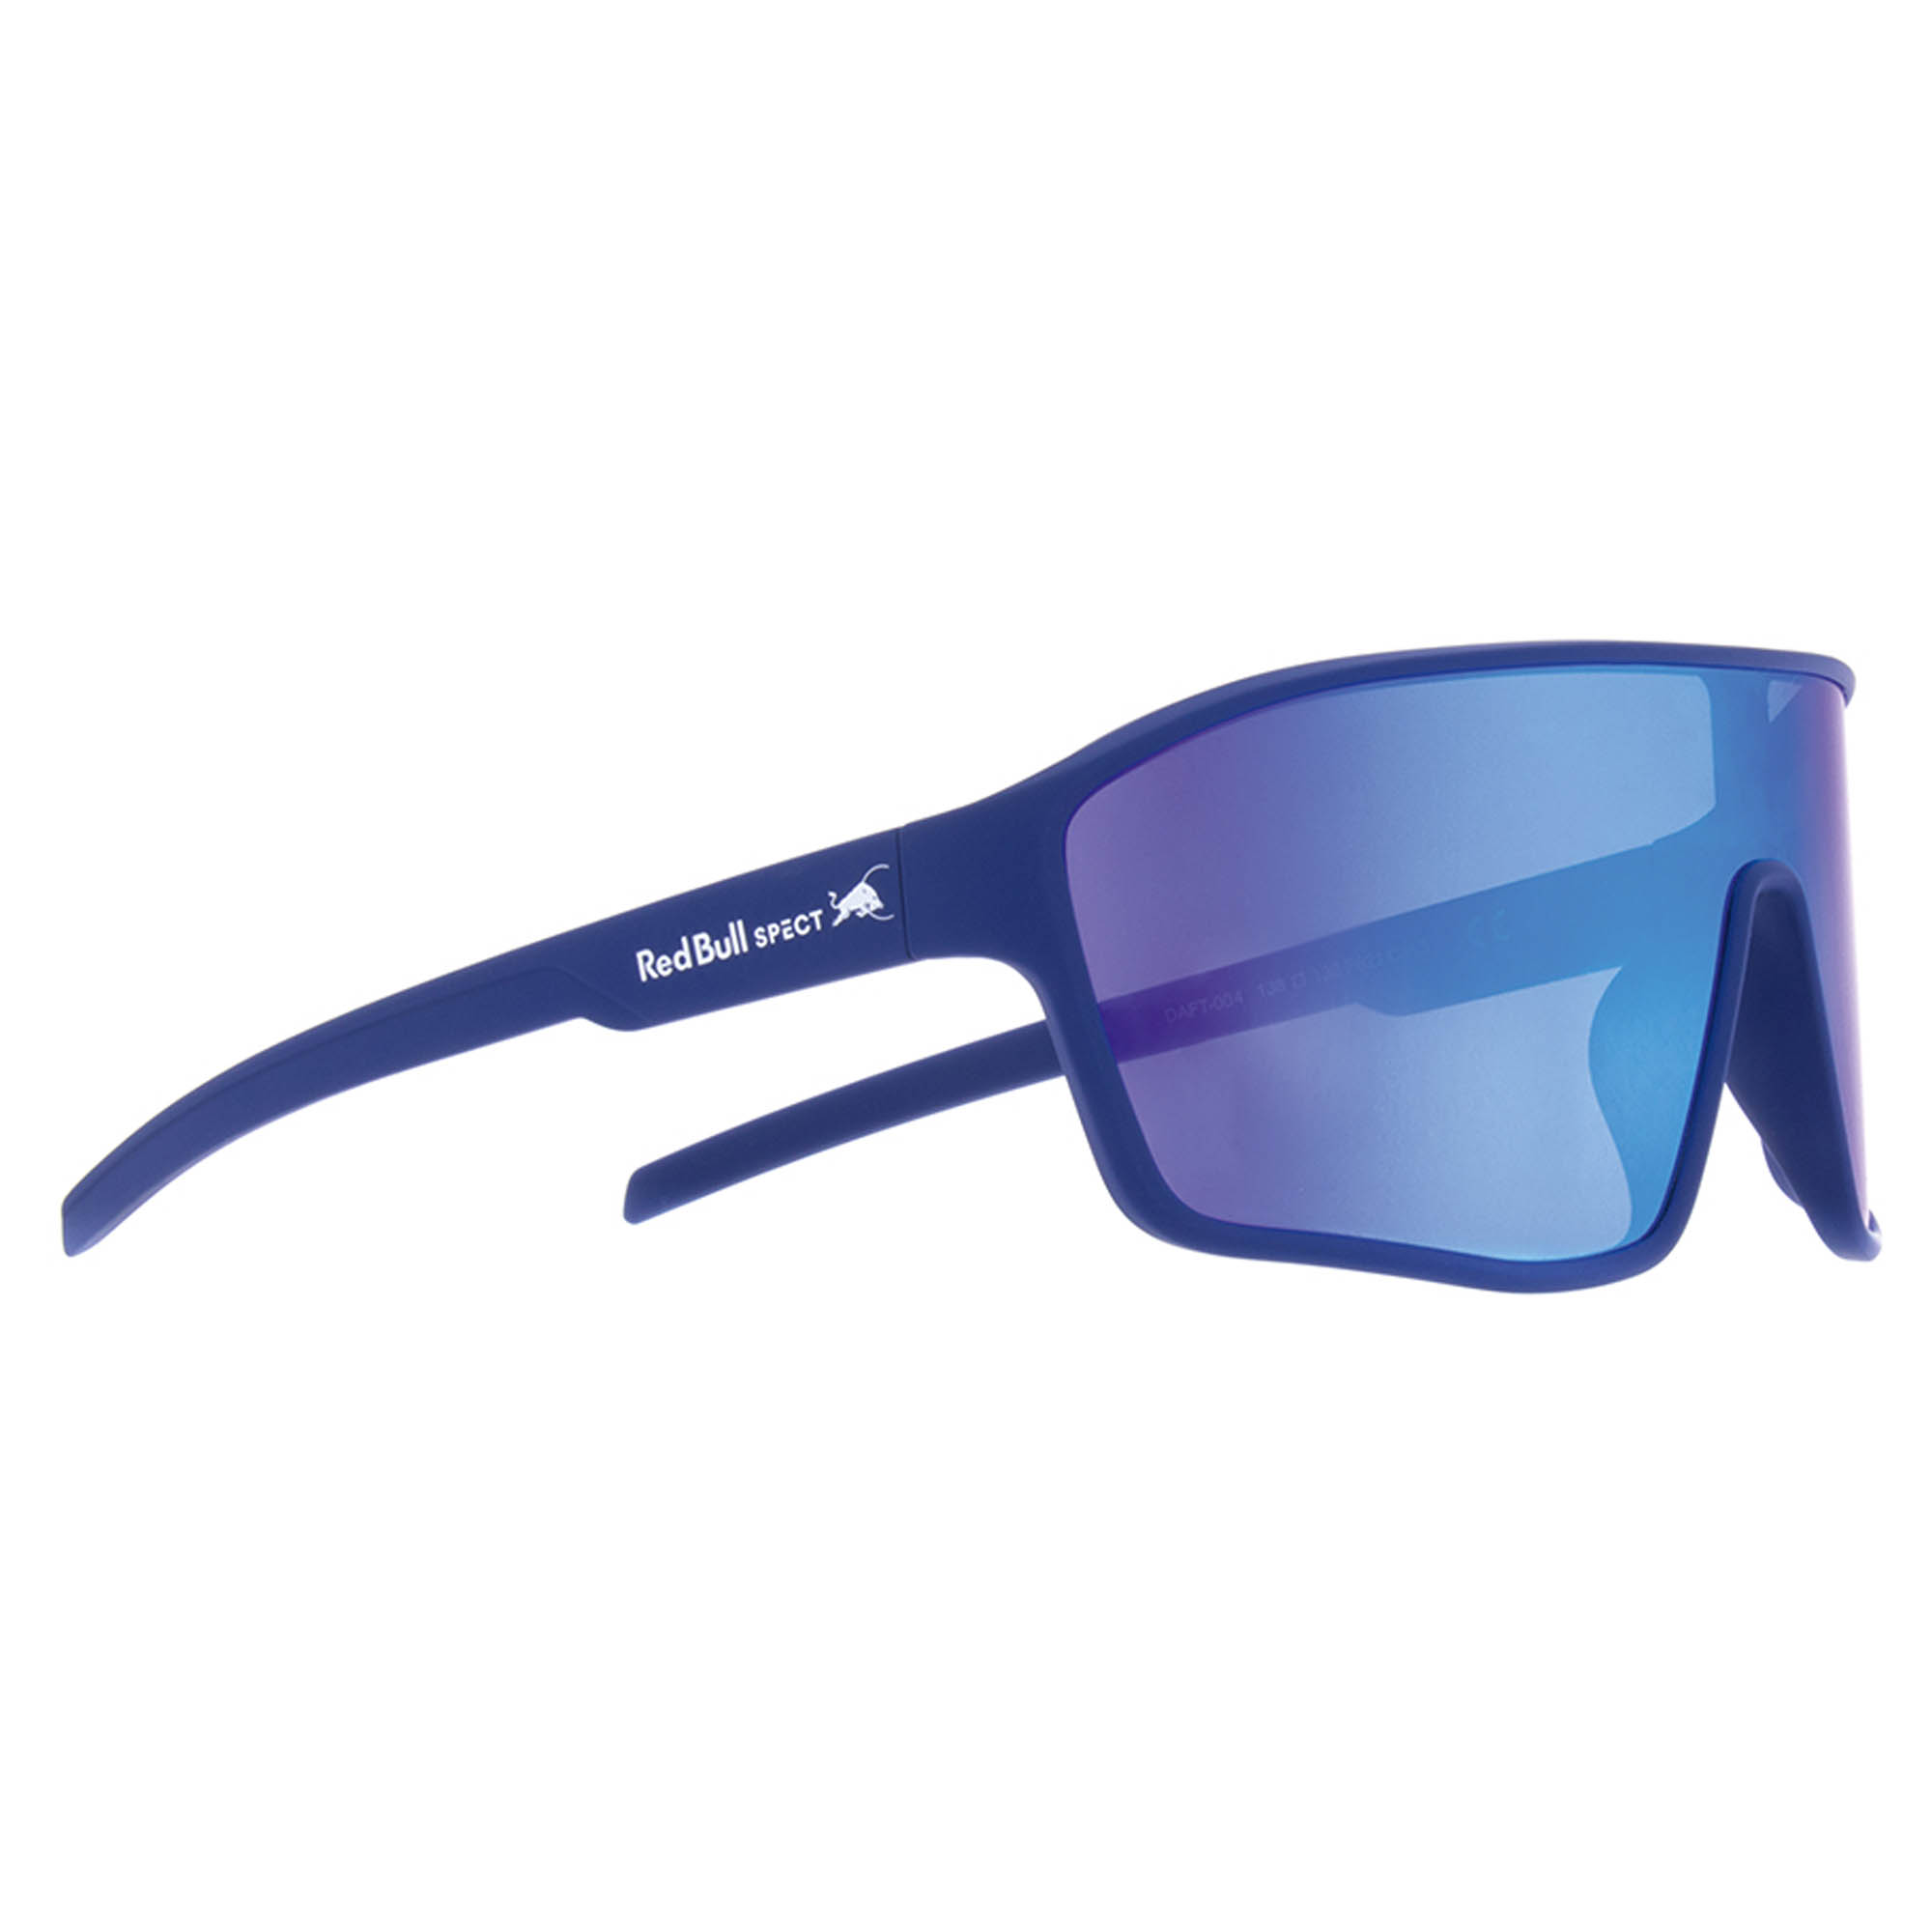 Sunglasses Daft-004